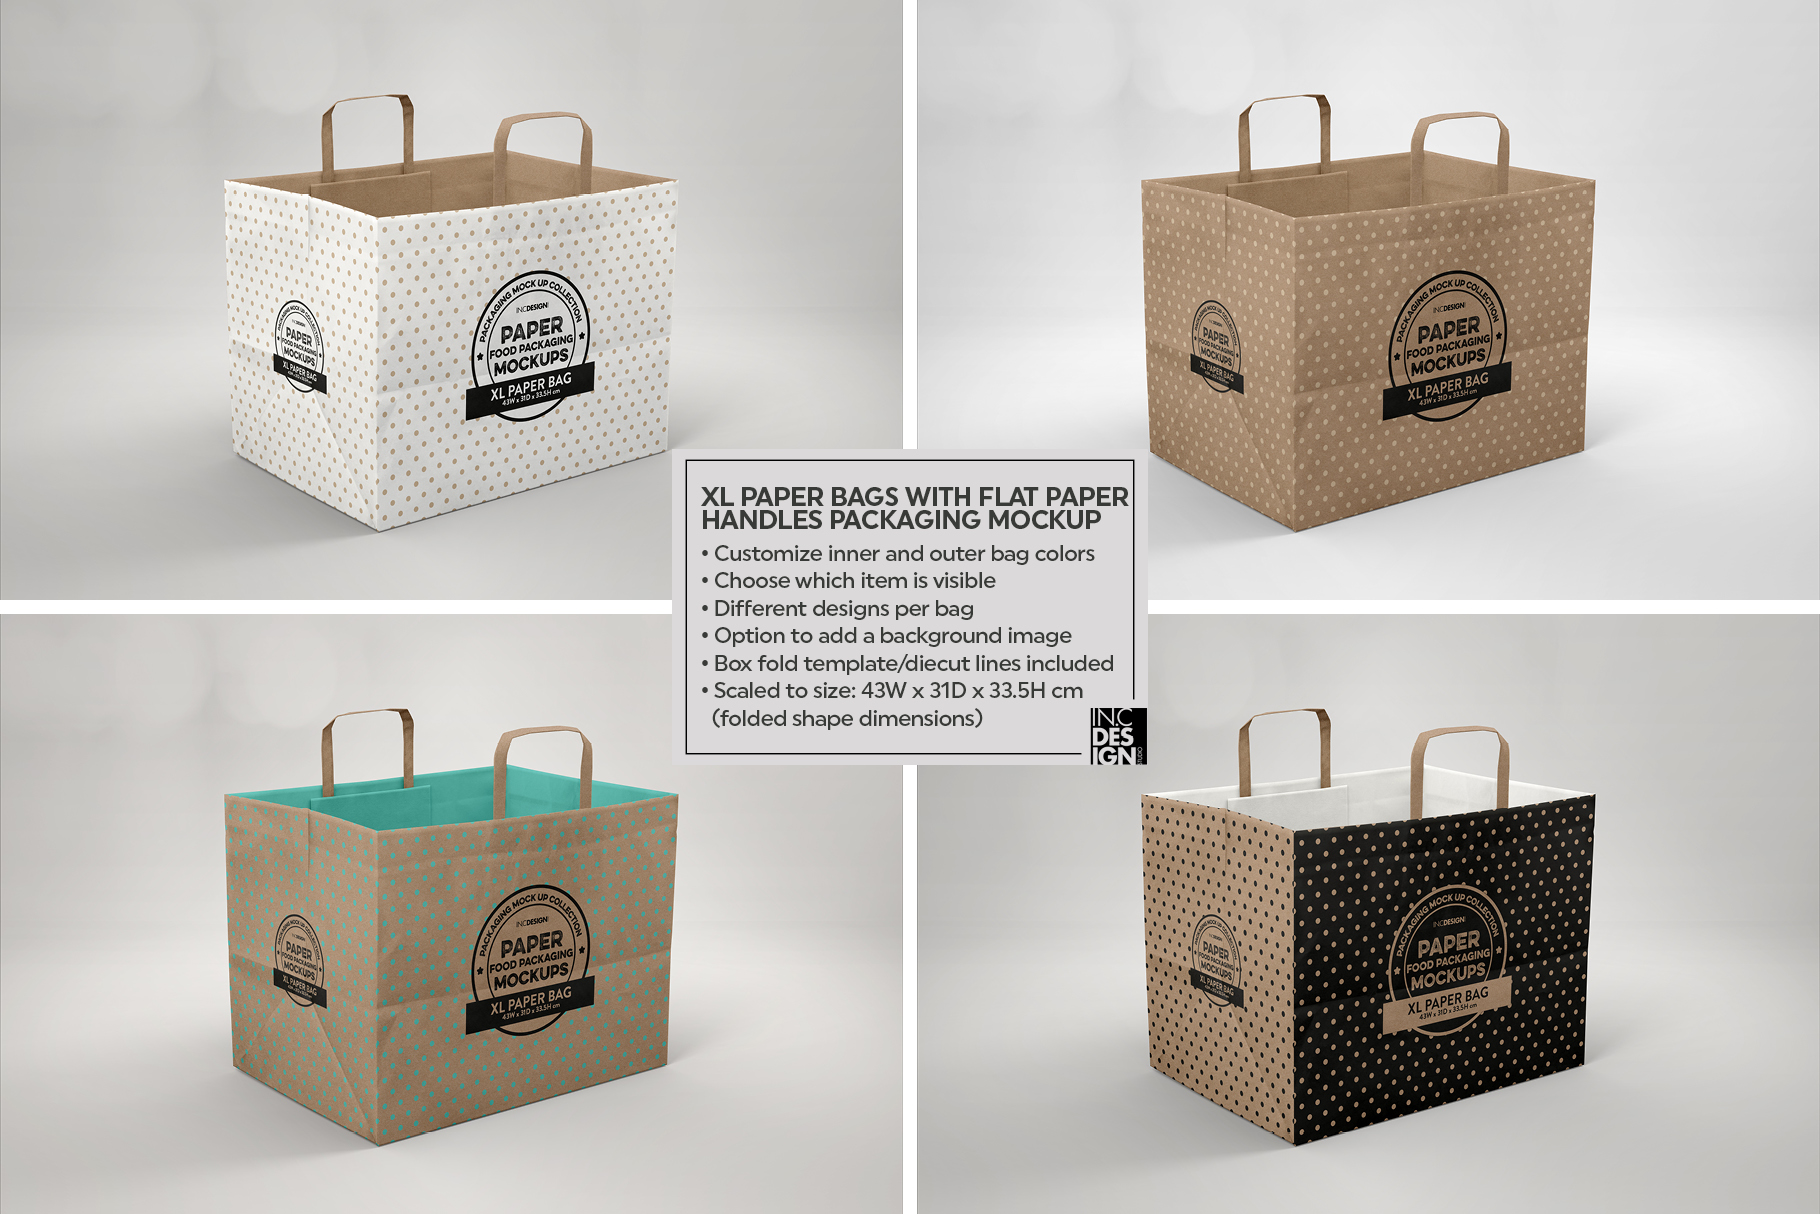 Download XL Paper Bag with Flat Handles Packaging Mockup (284096) | Branding | Design Bundles